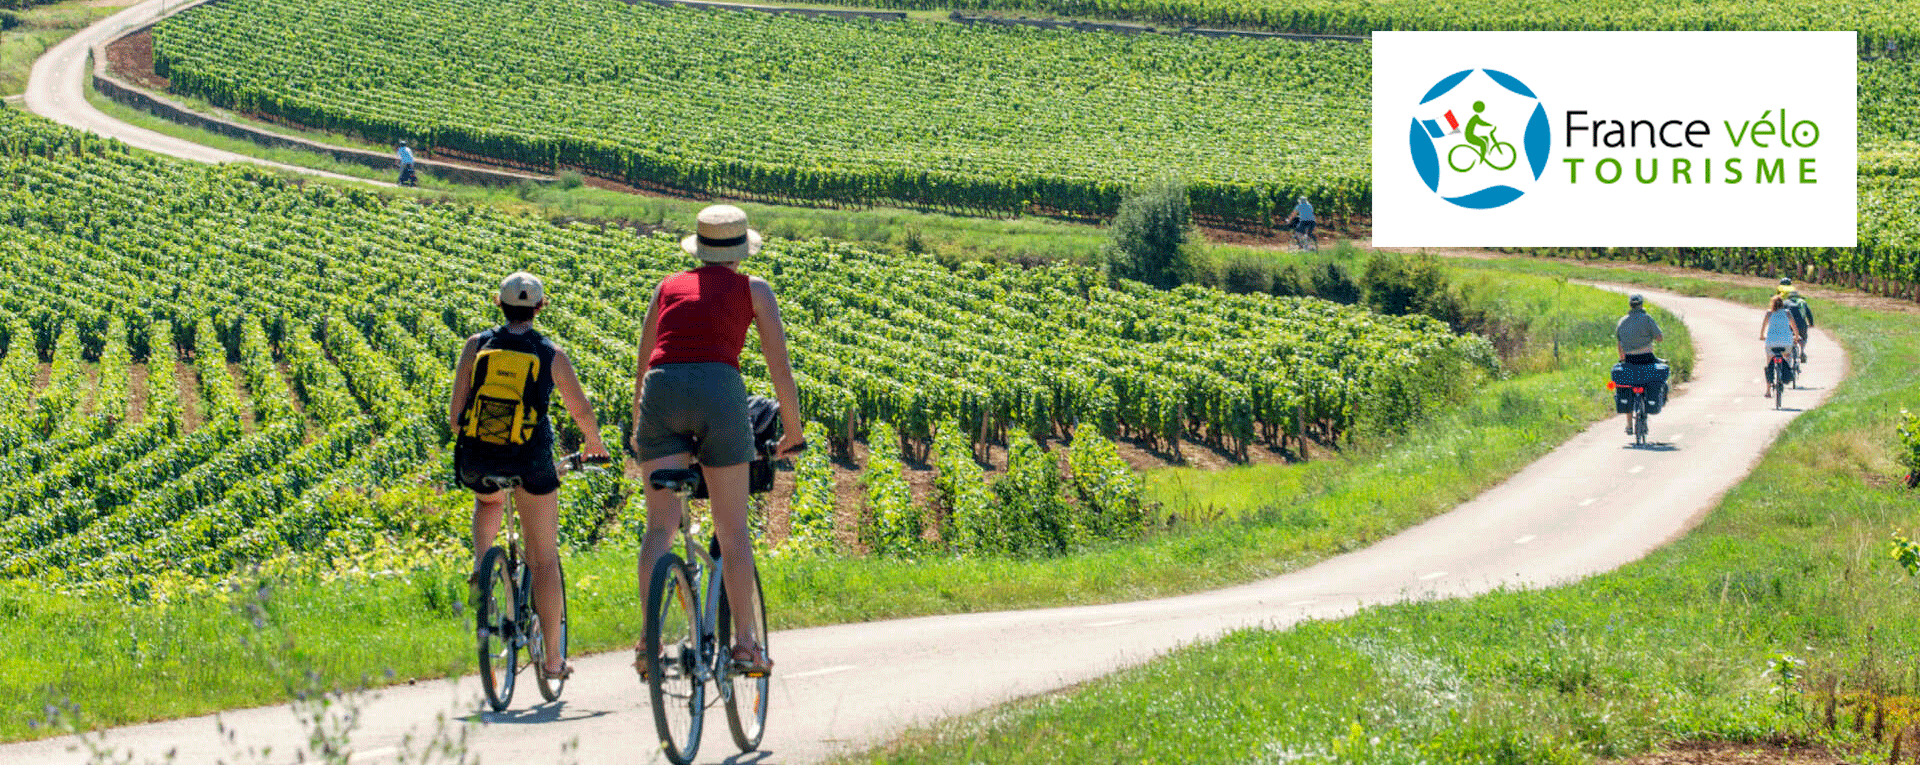 France vélo tourisme